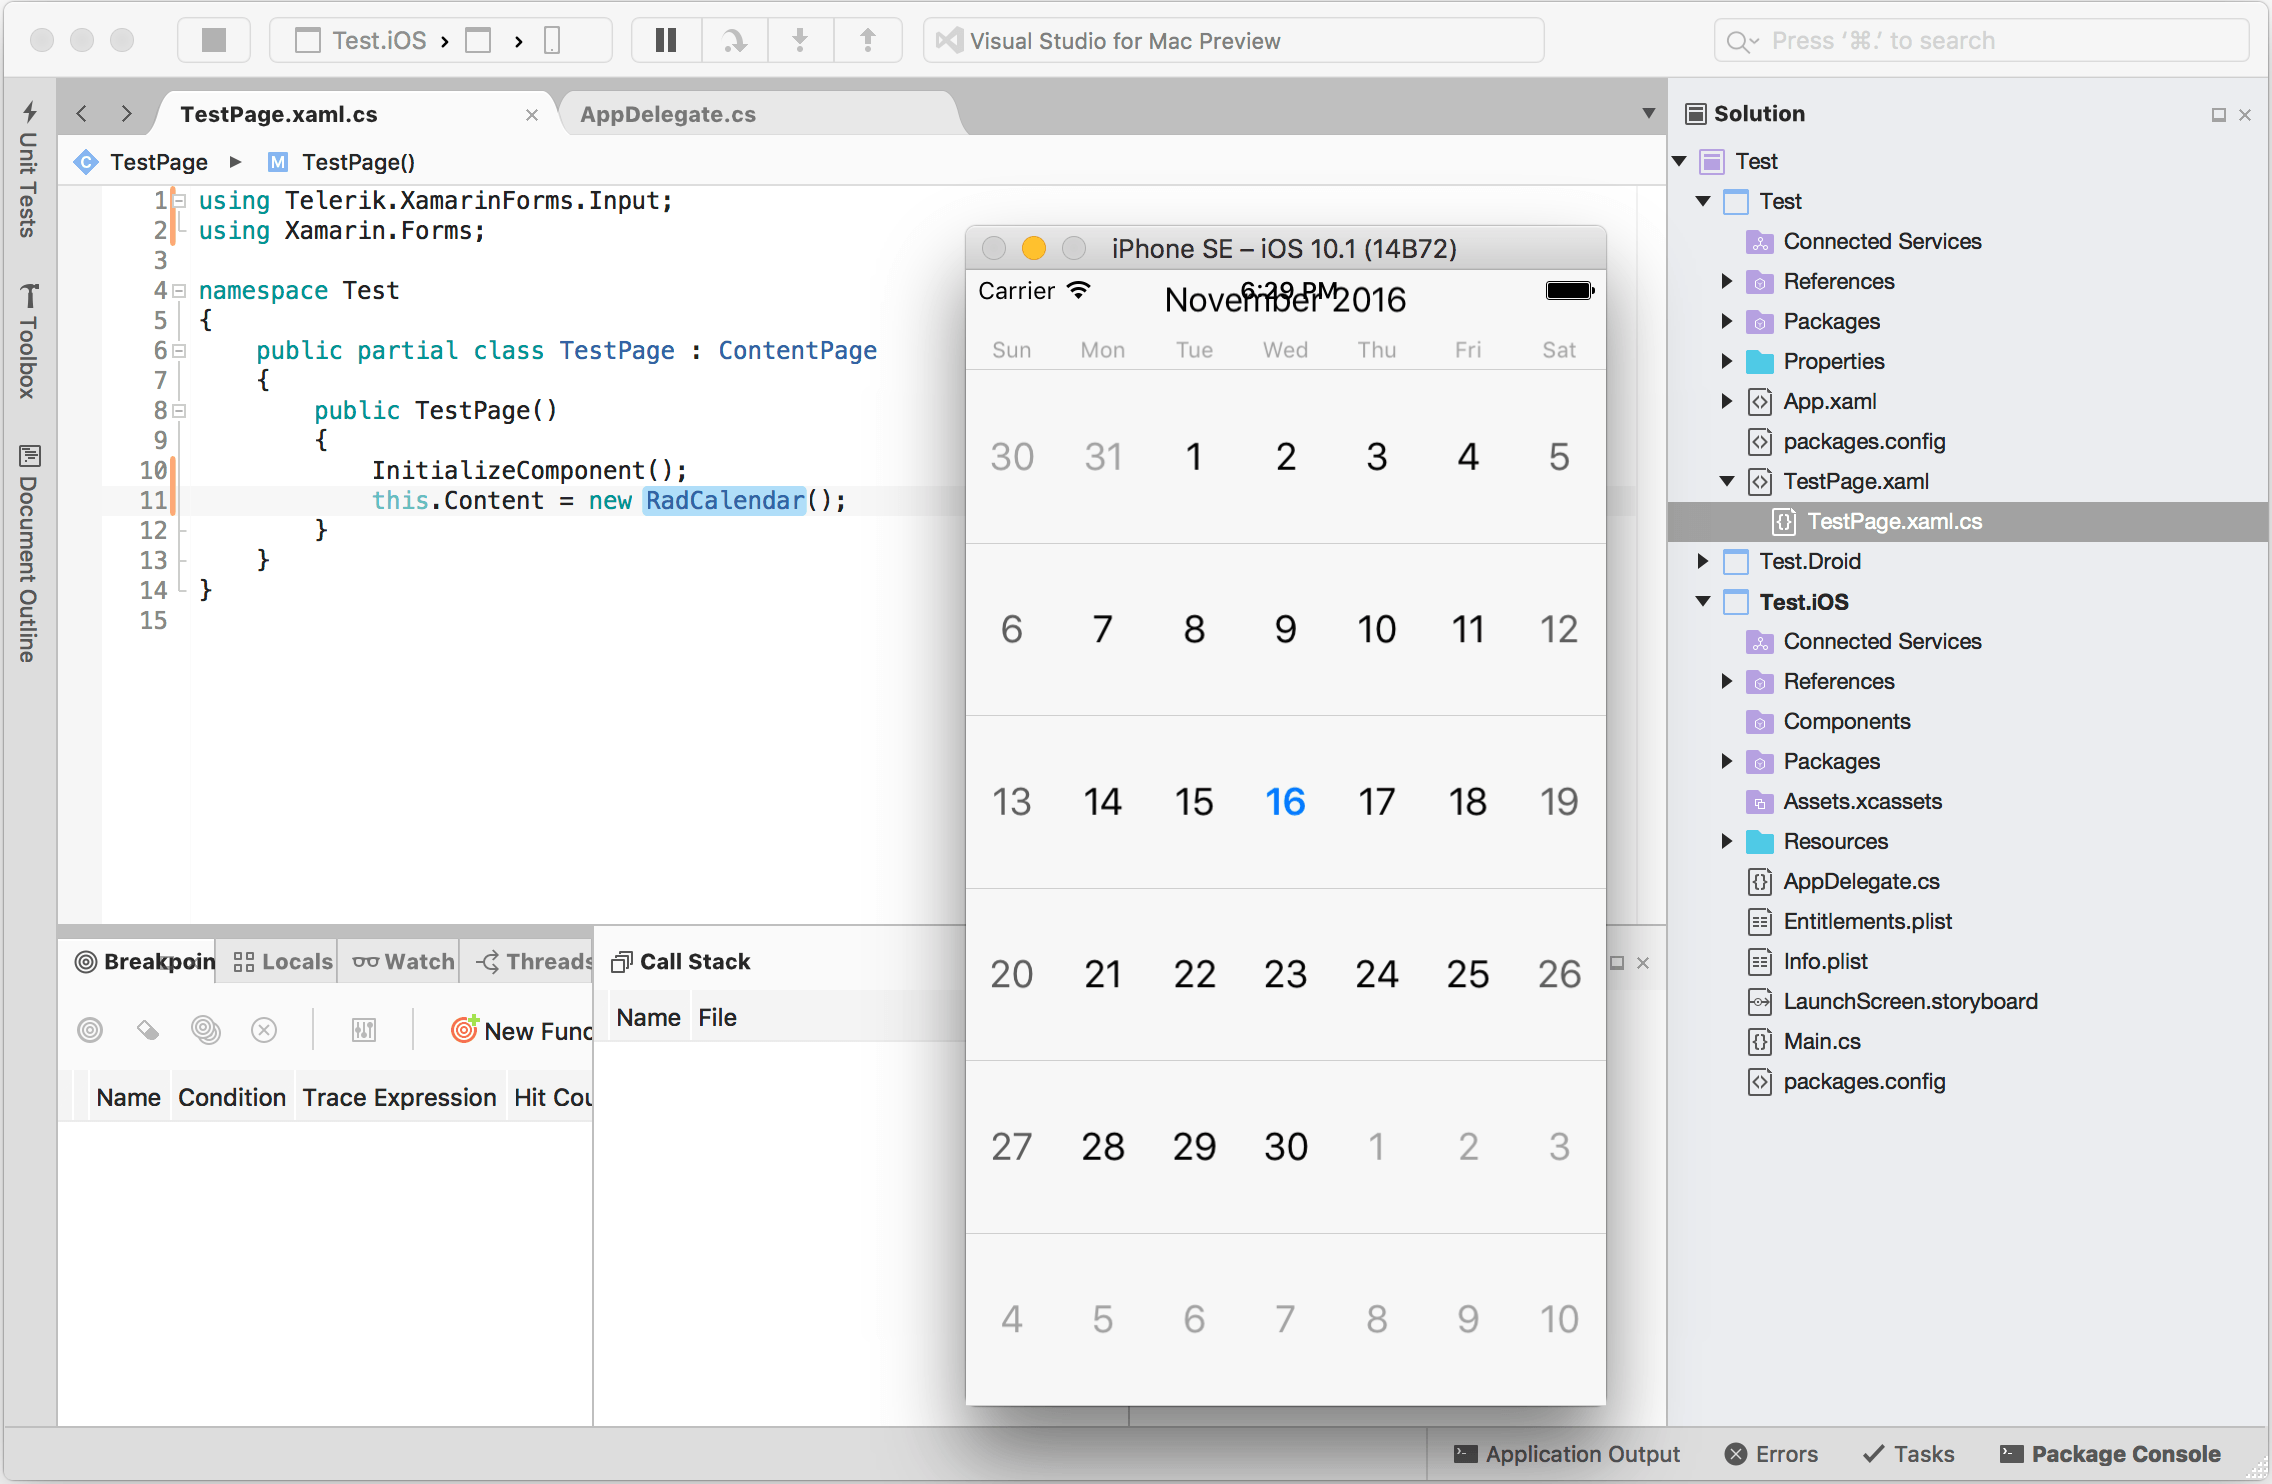 Using UI for Xamarin in Visual Studio for Mac